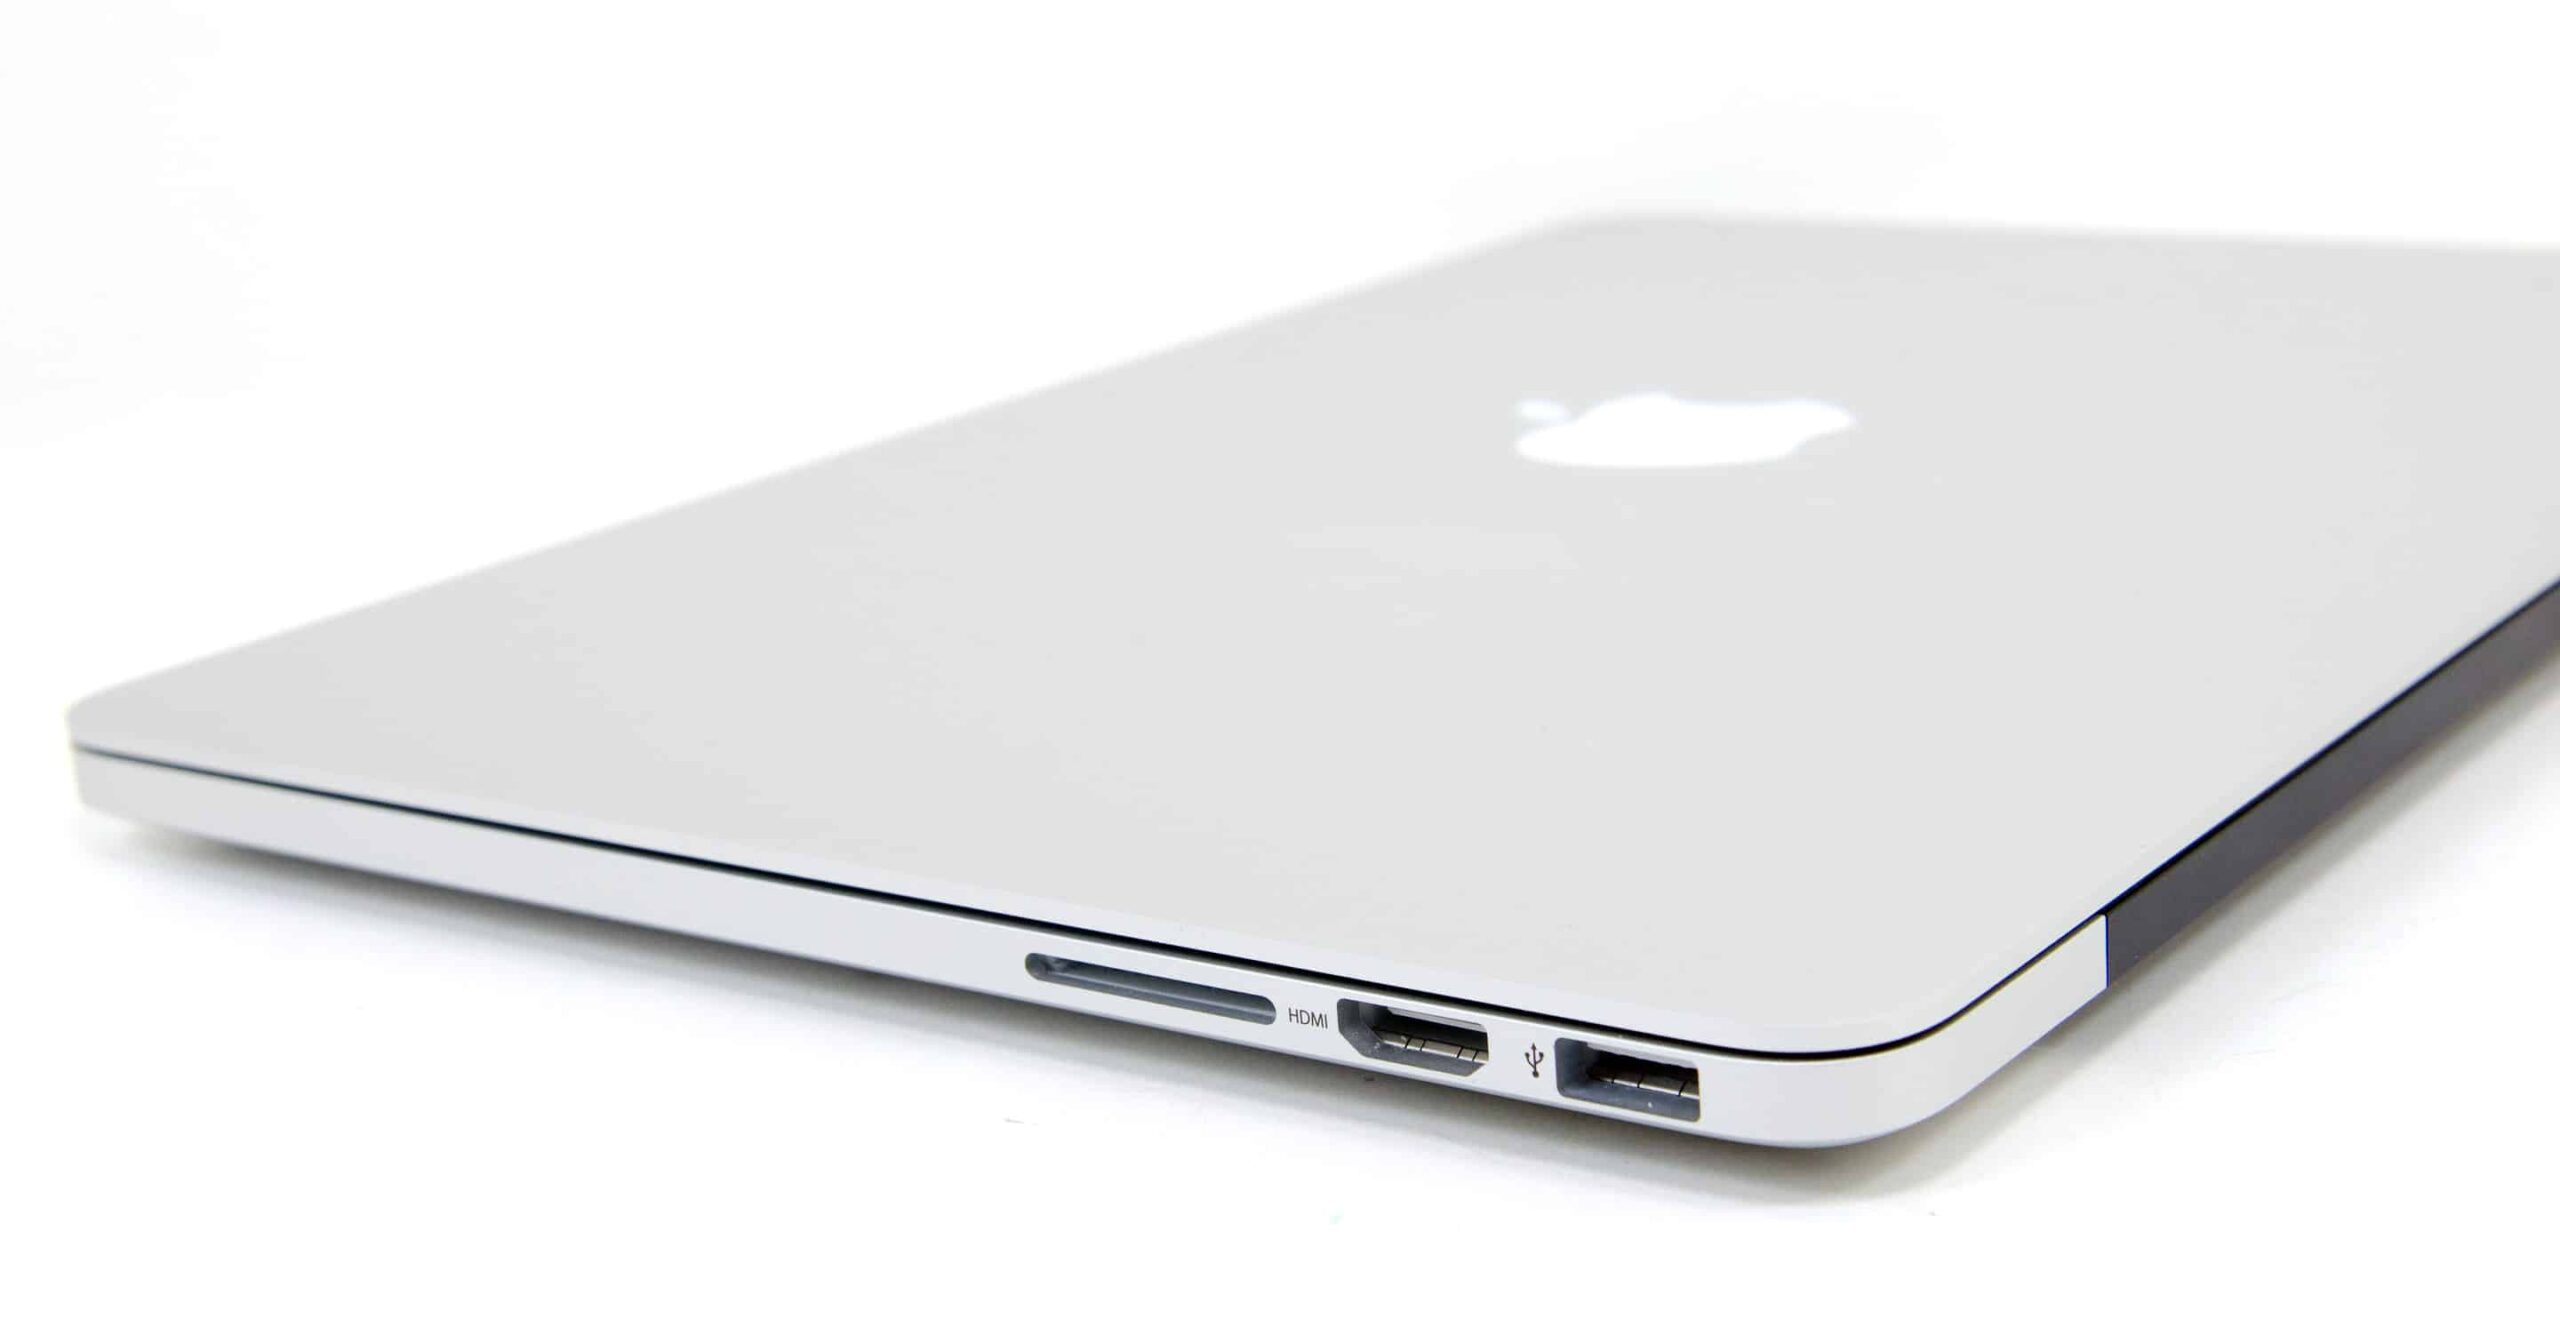 Apple should bring back MacBook Pro’s SD card slot